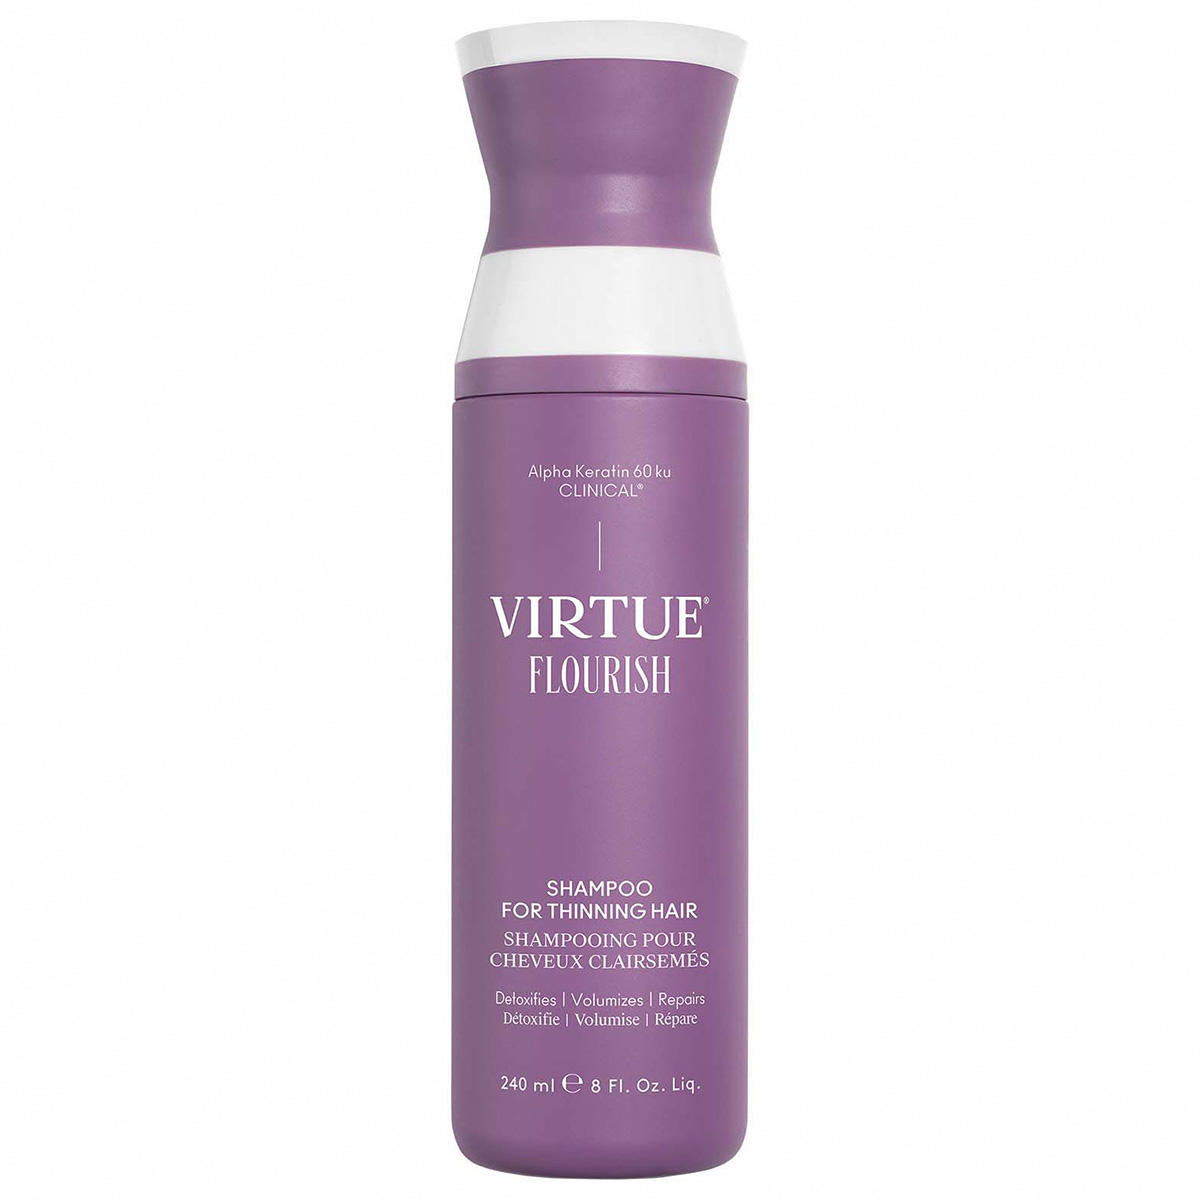 Virtue Flourish Shampoo for Thinning Hair  240 ml - 1